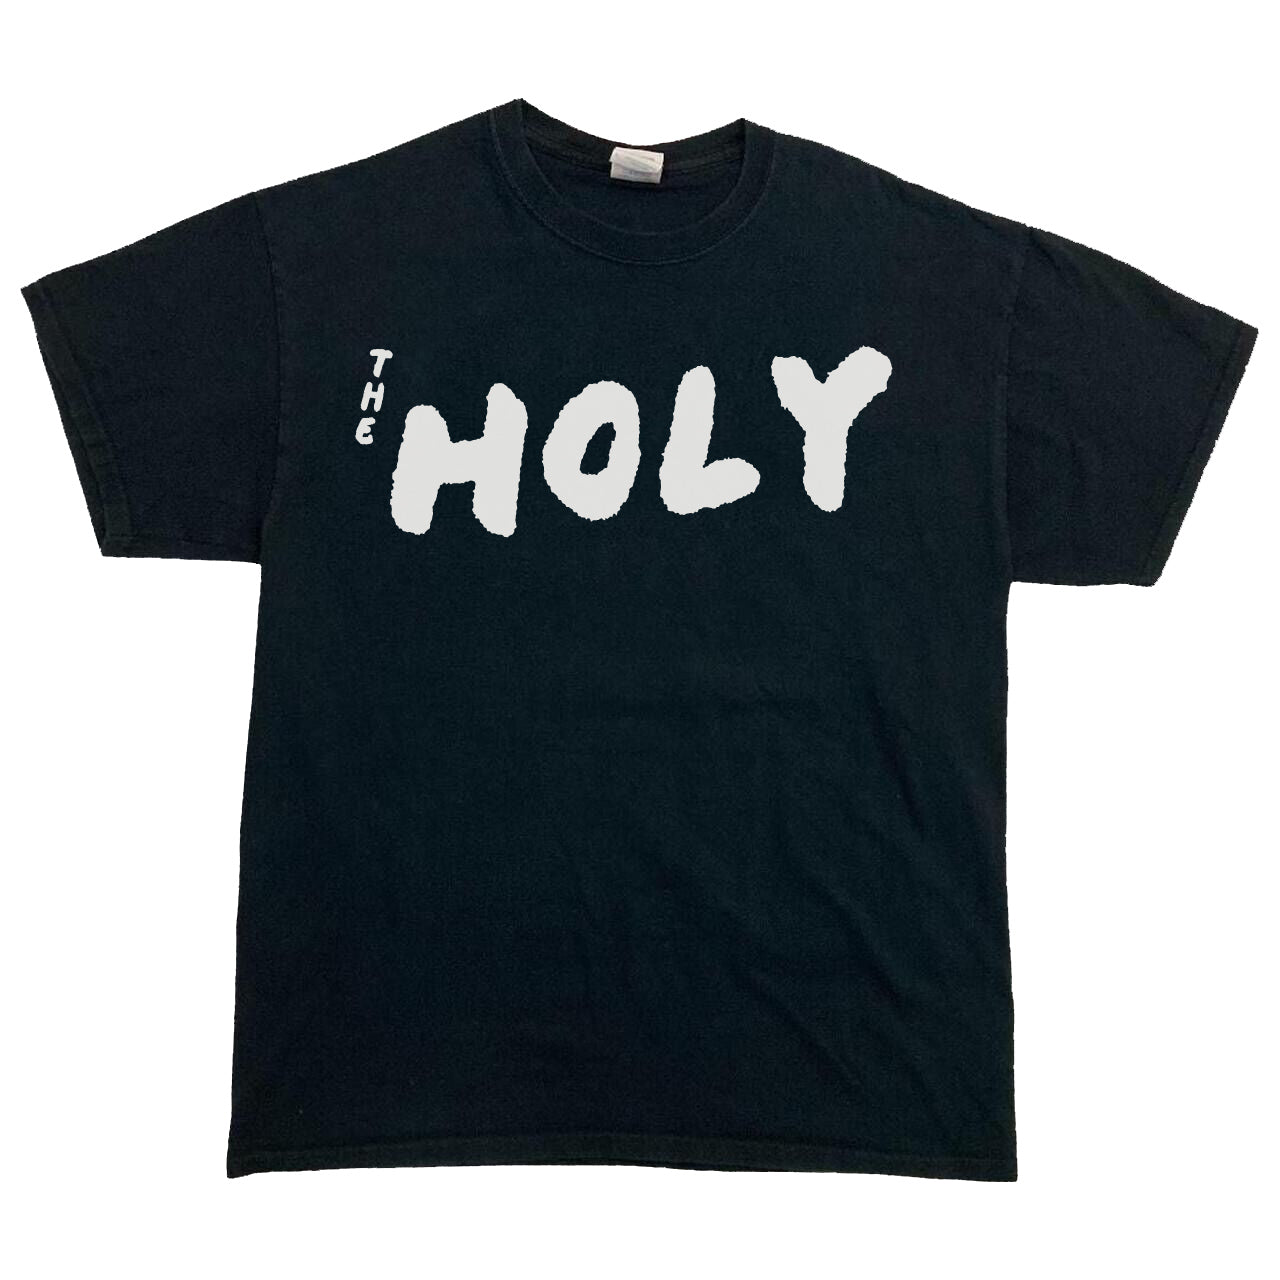 The Holy logo T-shirt